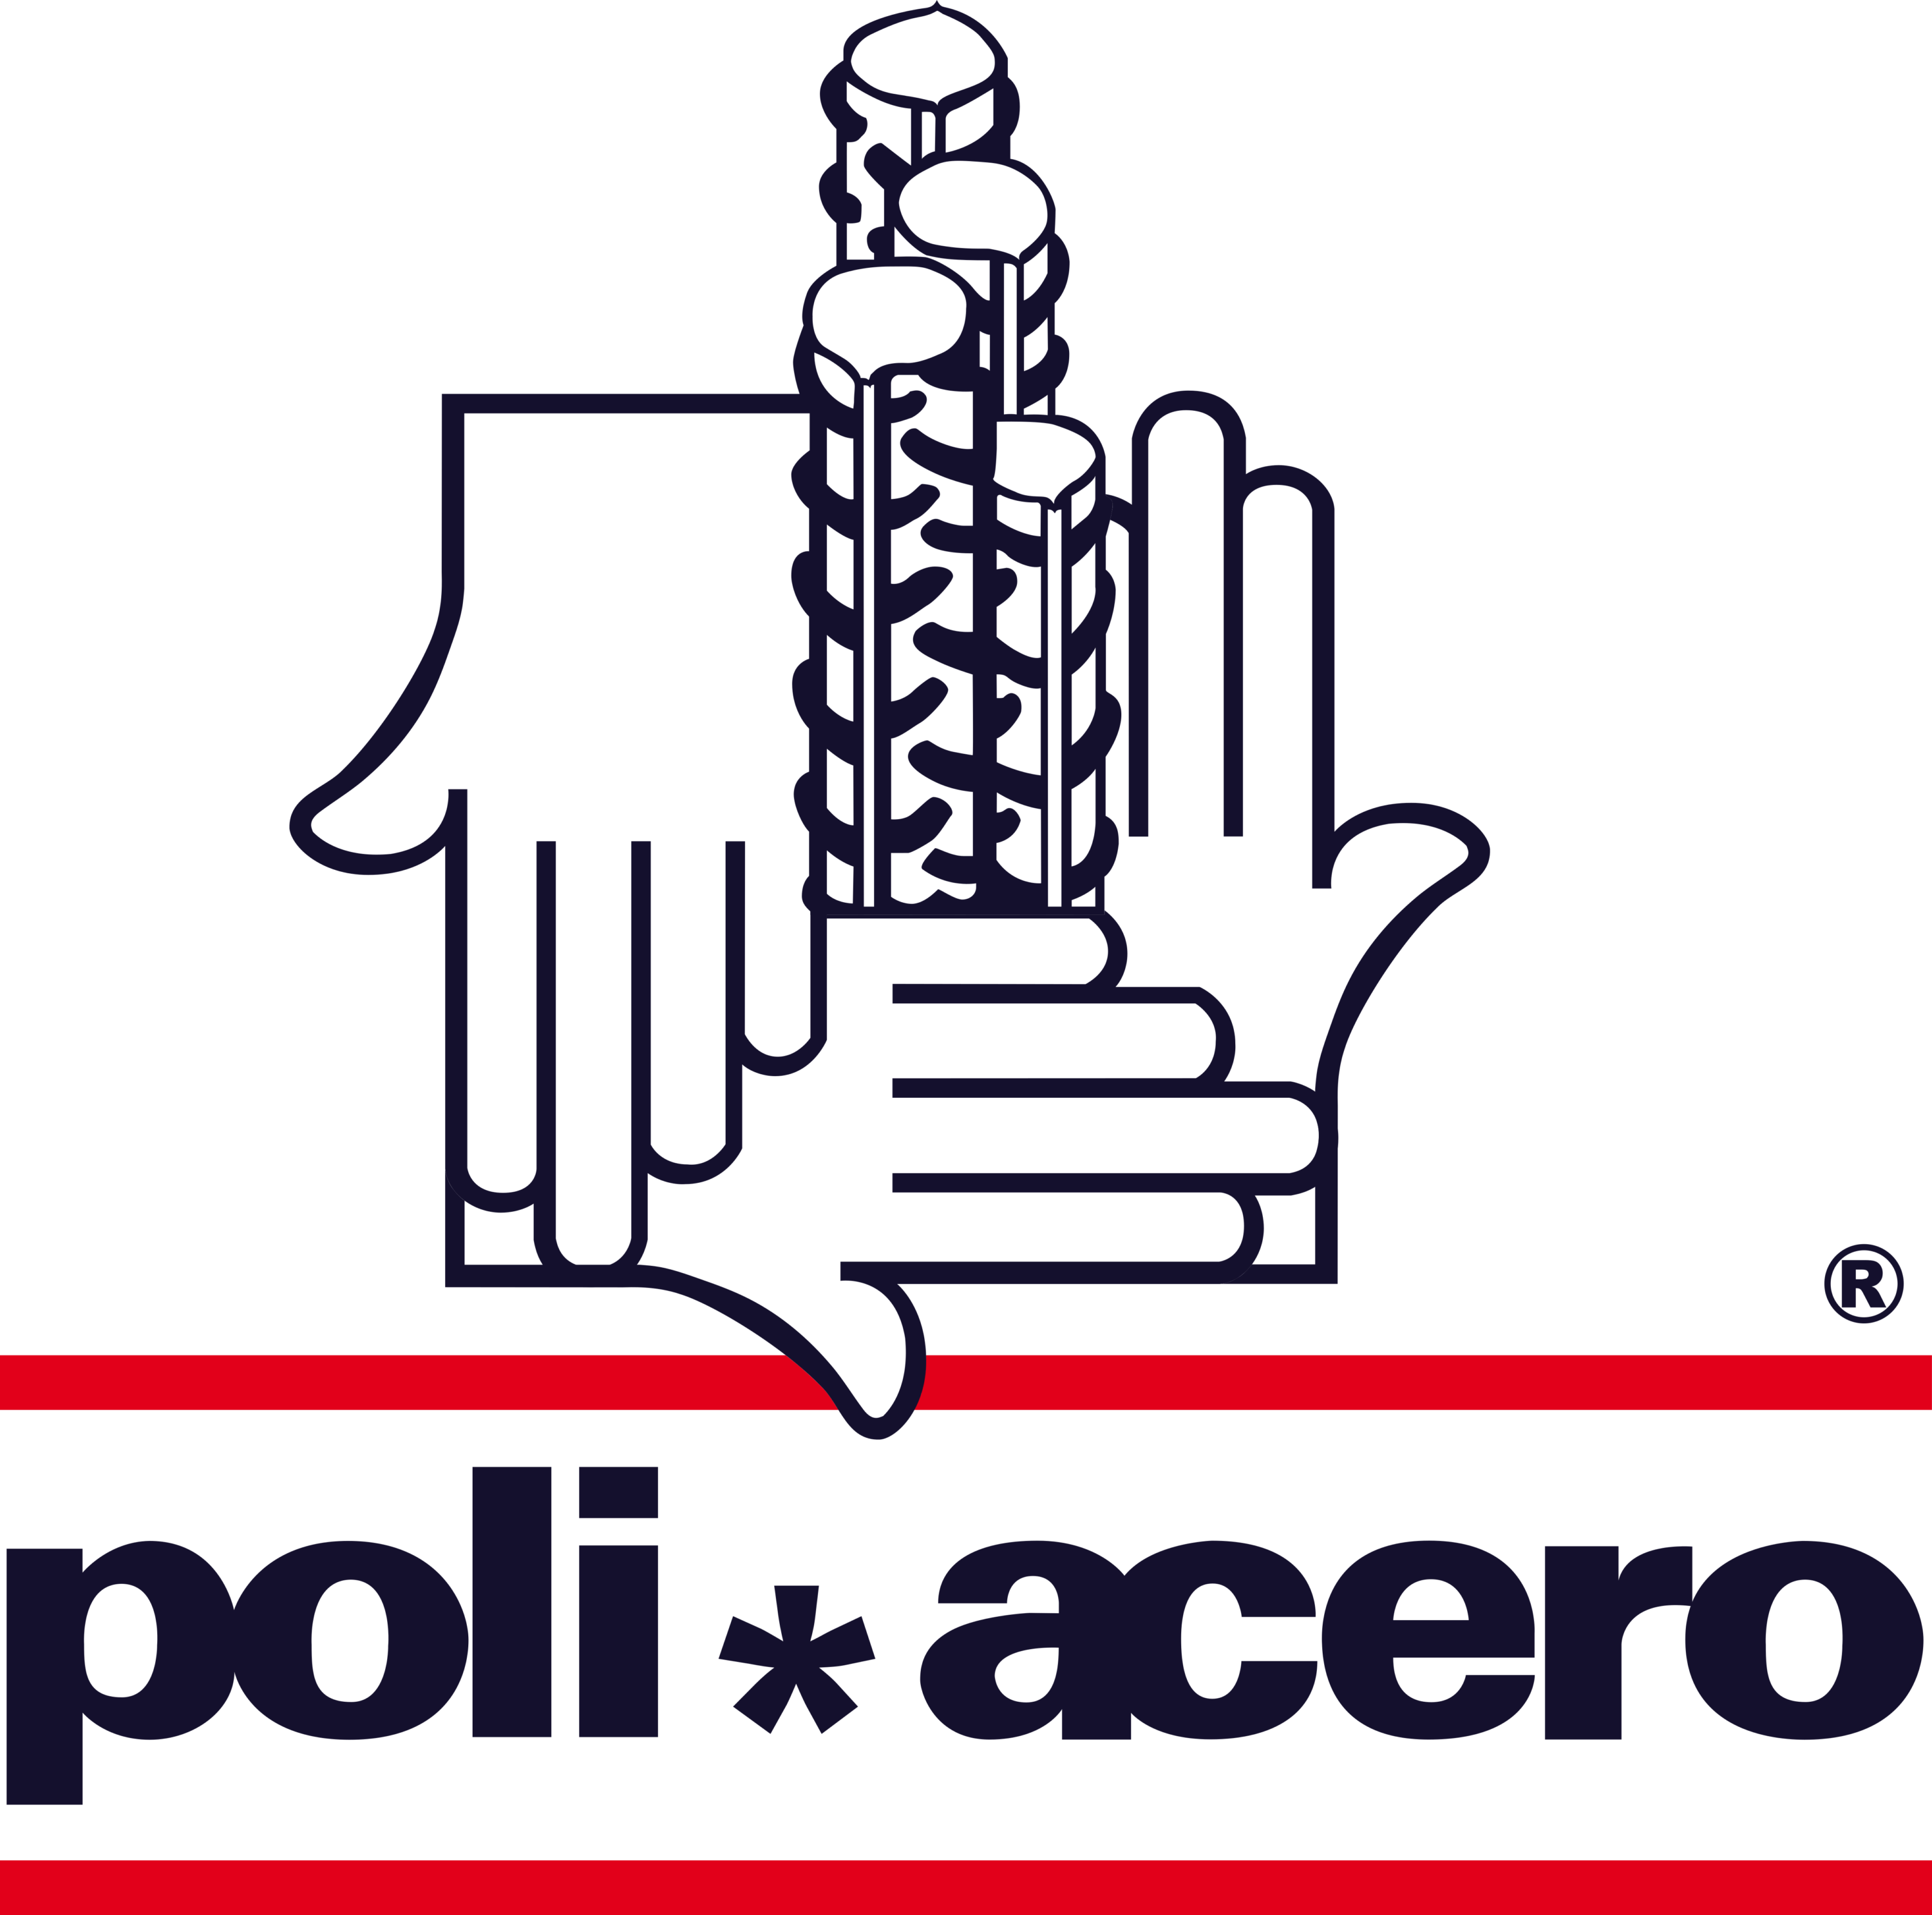 Poliacero Logo